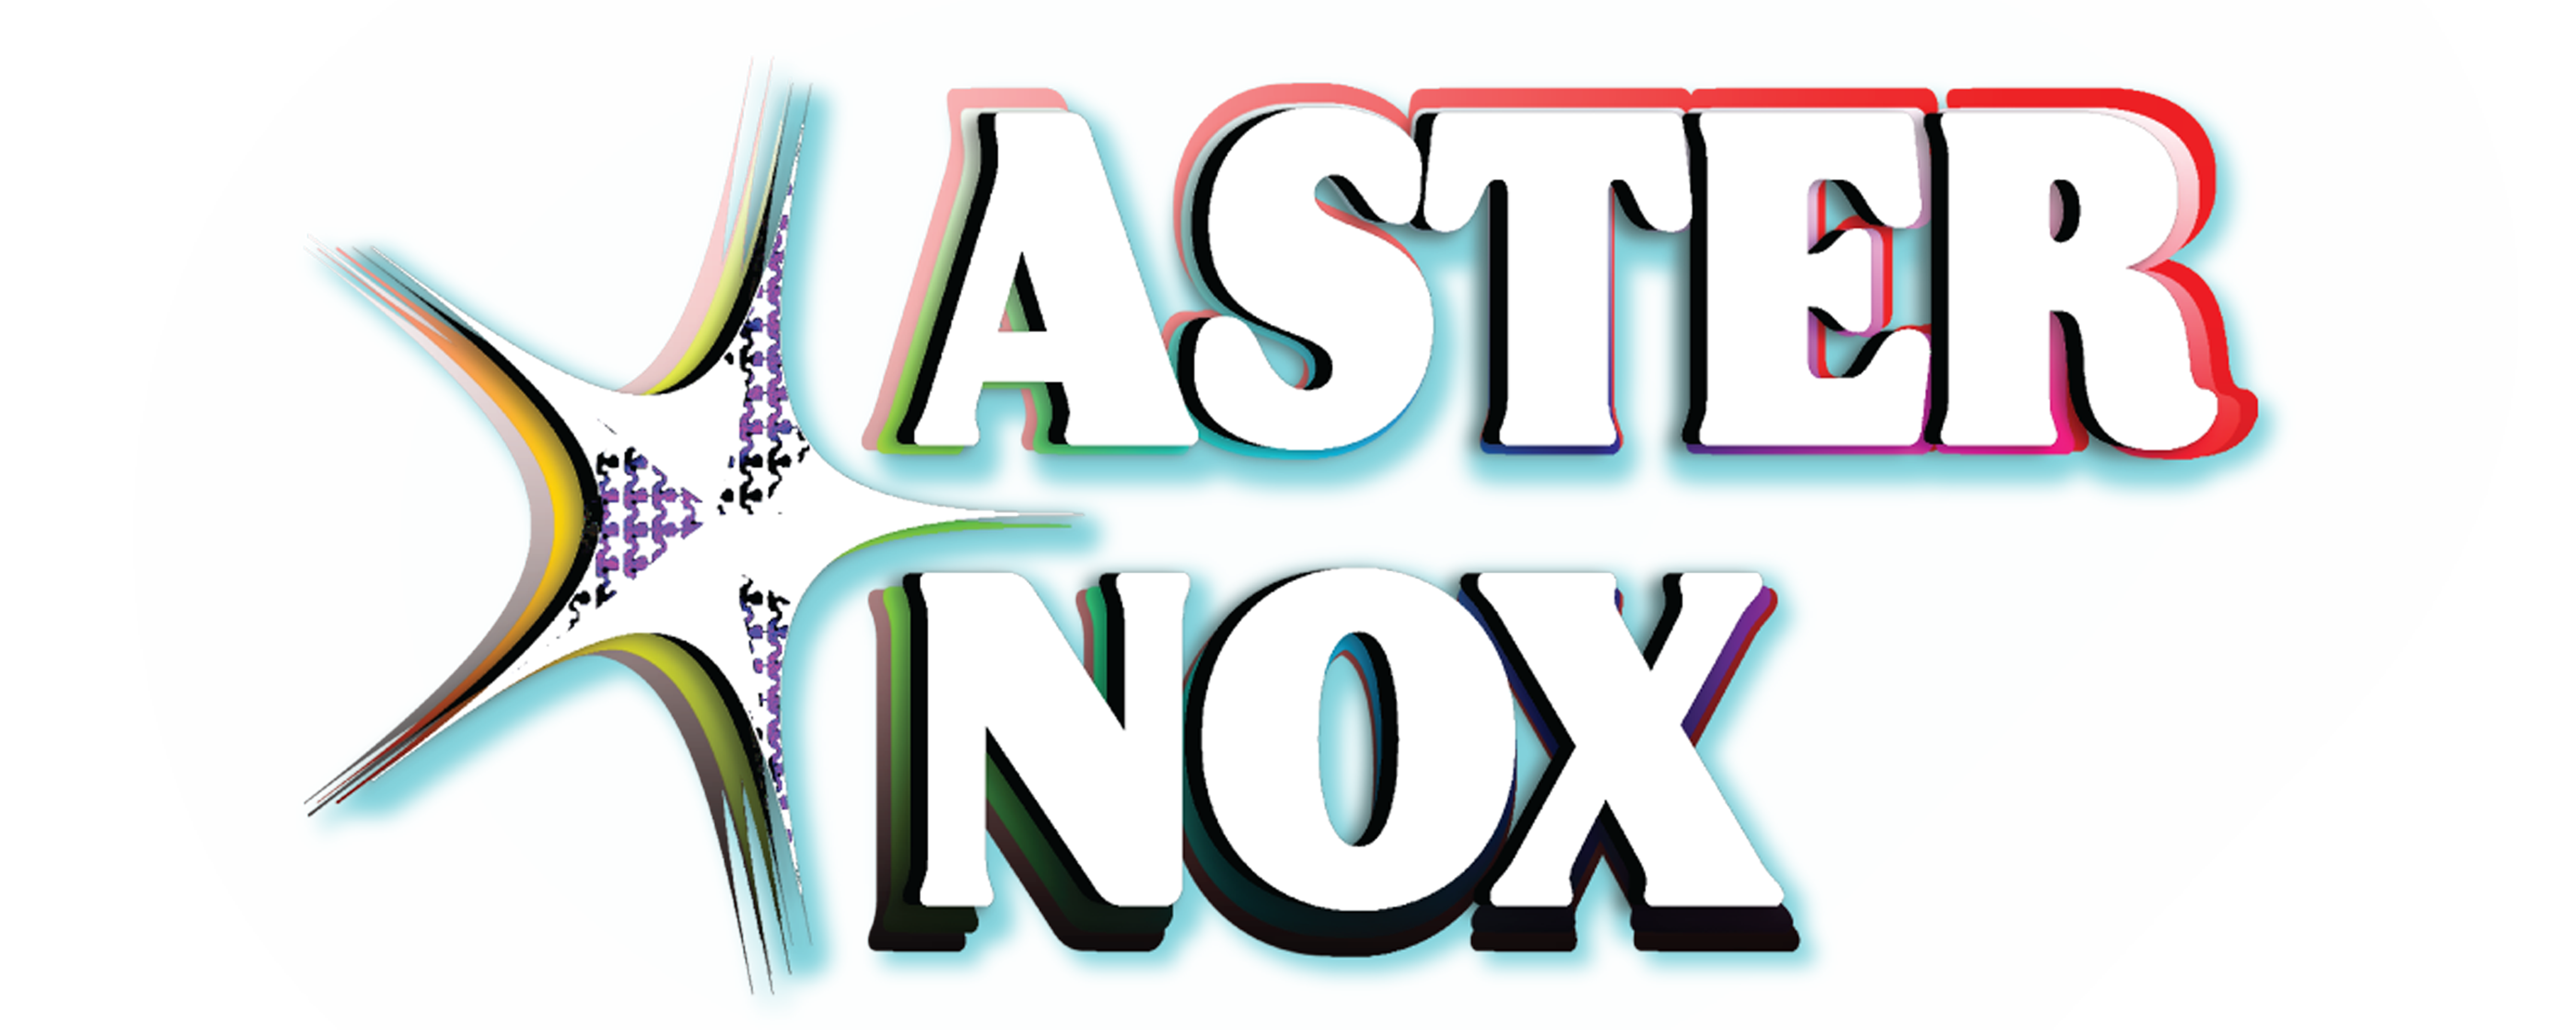 Aster Nox